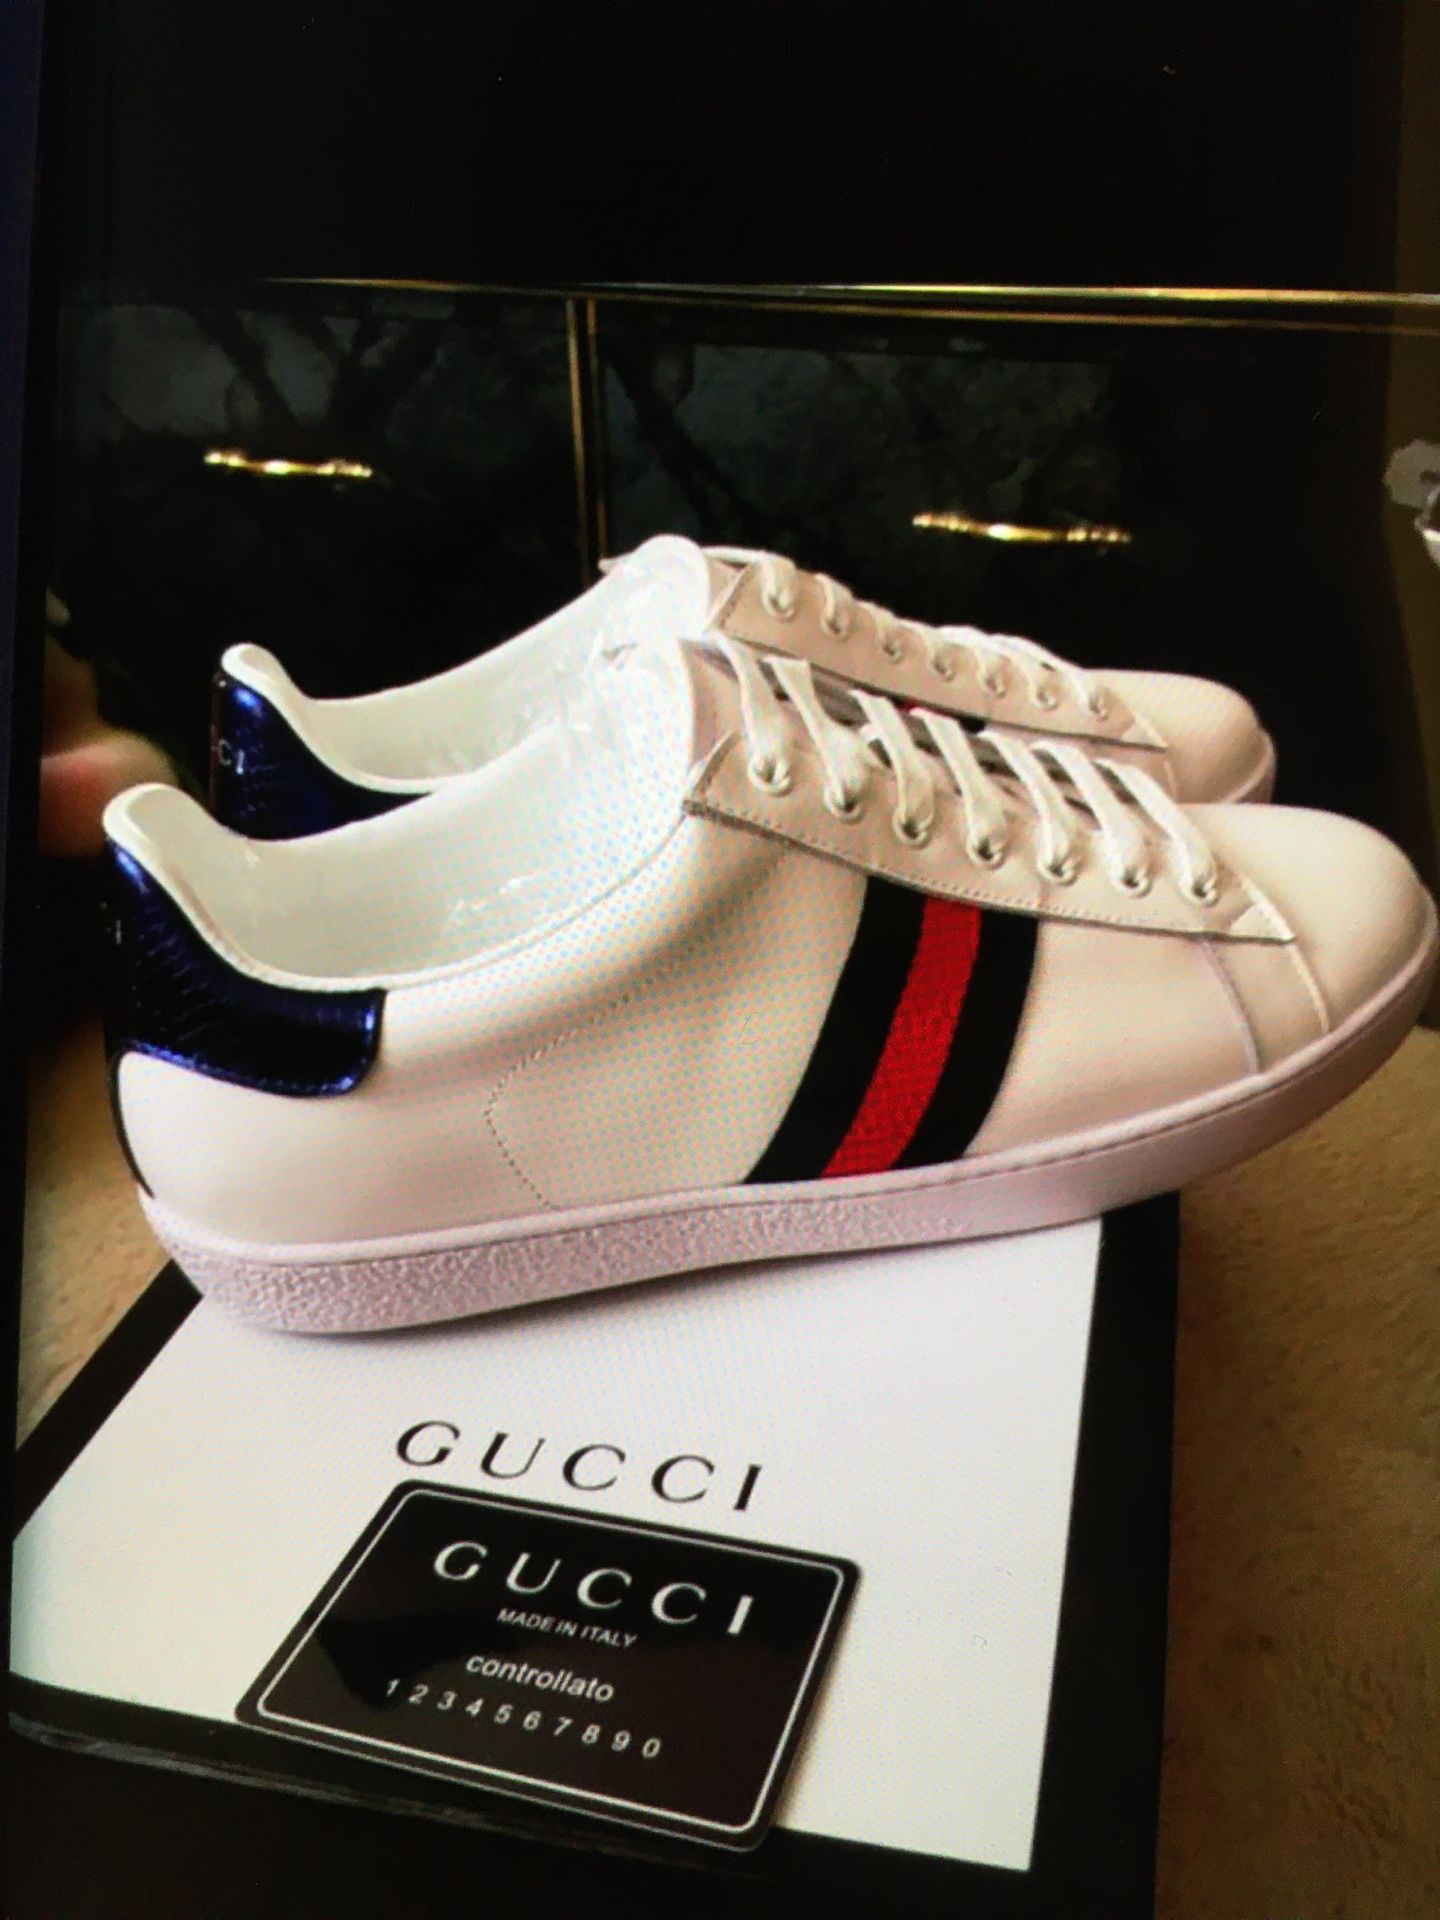 Gucci shoes